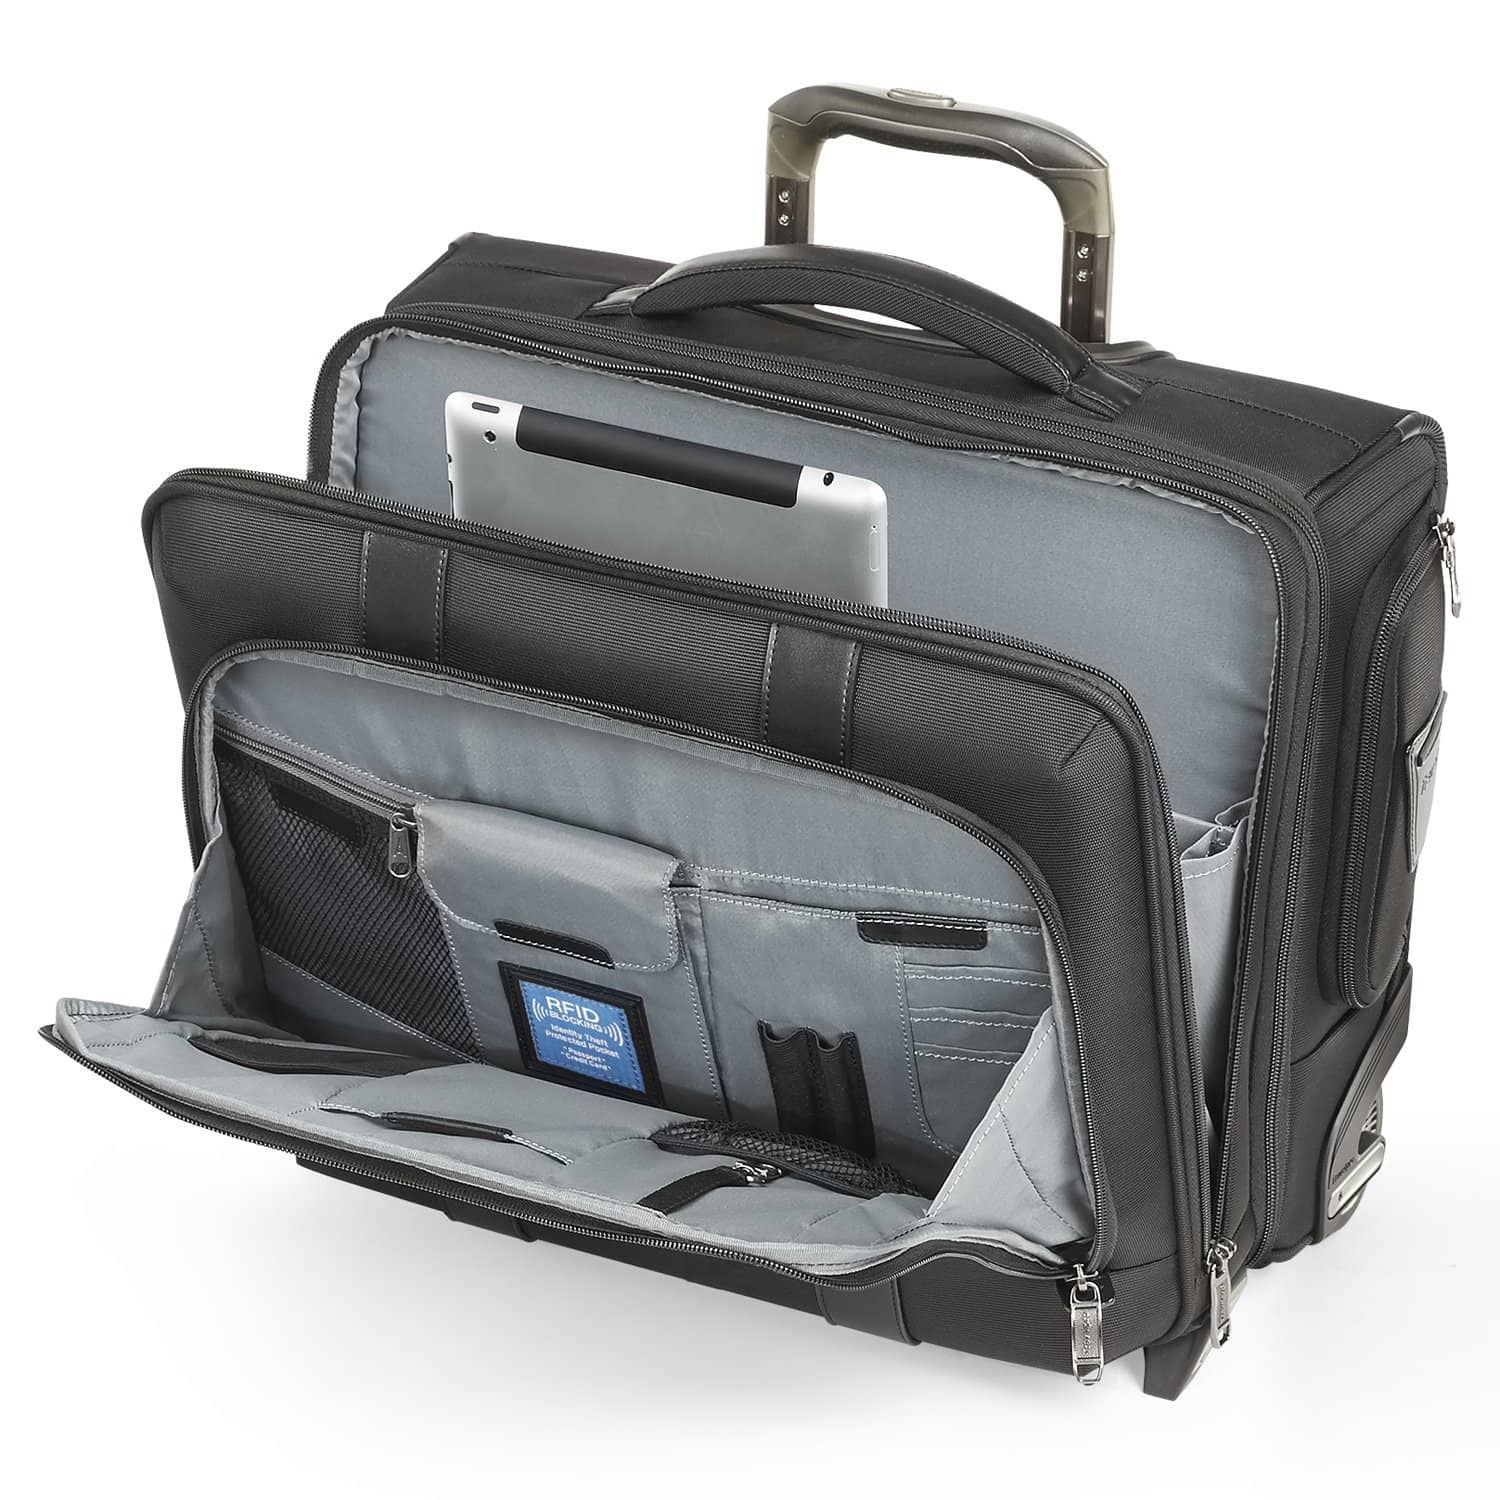 Buy WildHorn Leather Laptop Bag for Men/Office Bag for Men | Fits Upto 15.6  Inch Laptop/MacBook | Laptop Messenger Bag/Leather Bag for Men I Dimension  : L-16 inch W-4 inch H-12 inch